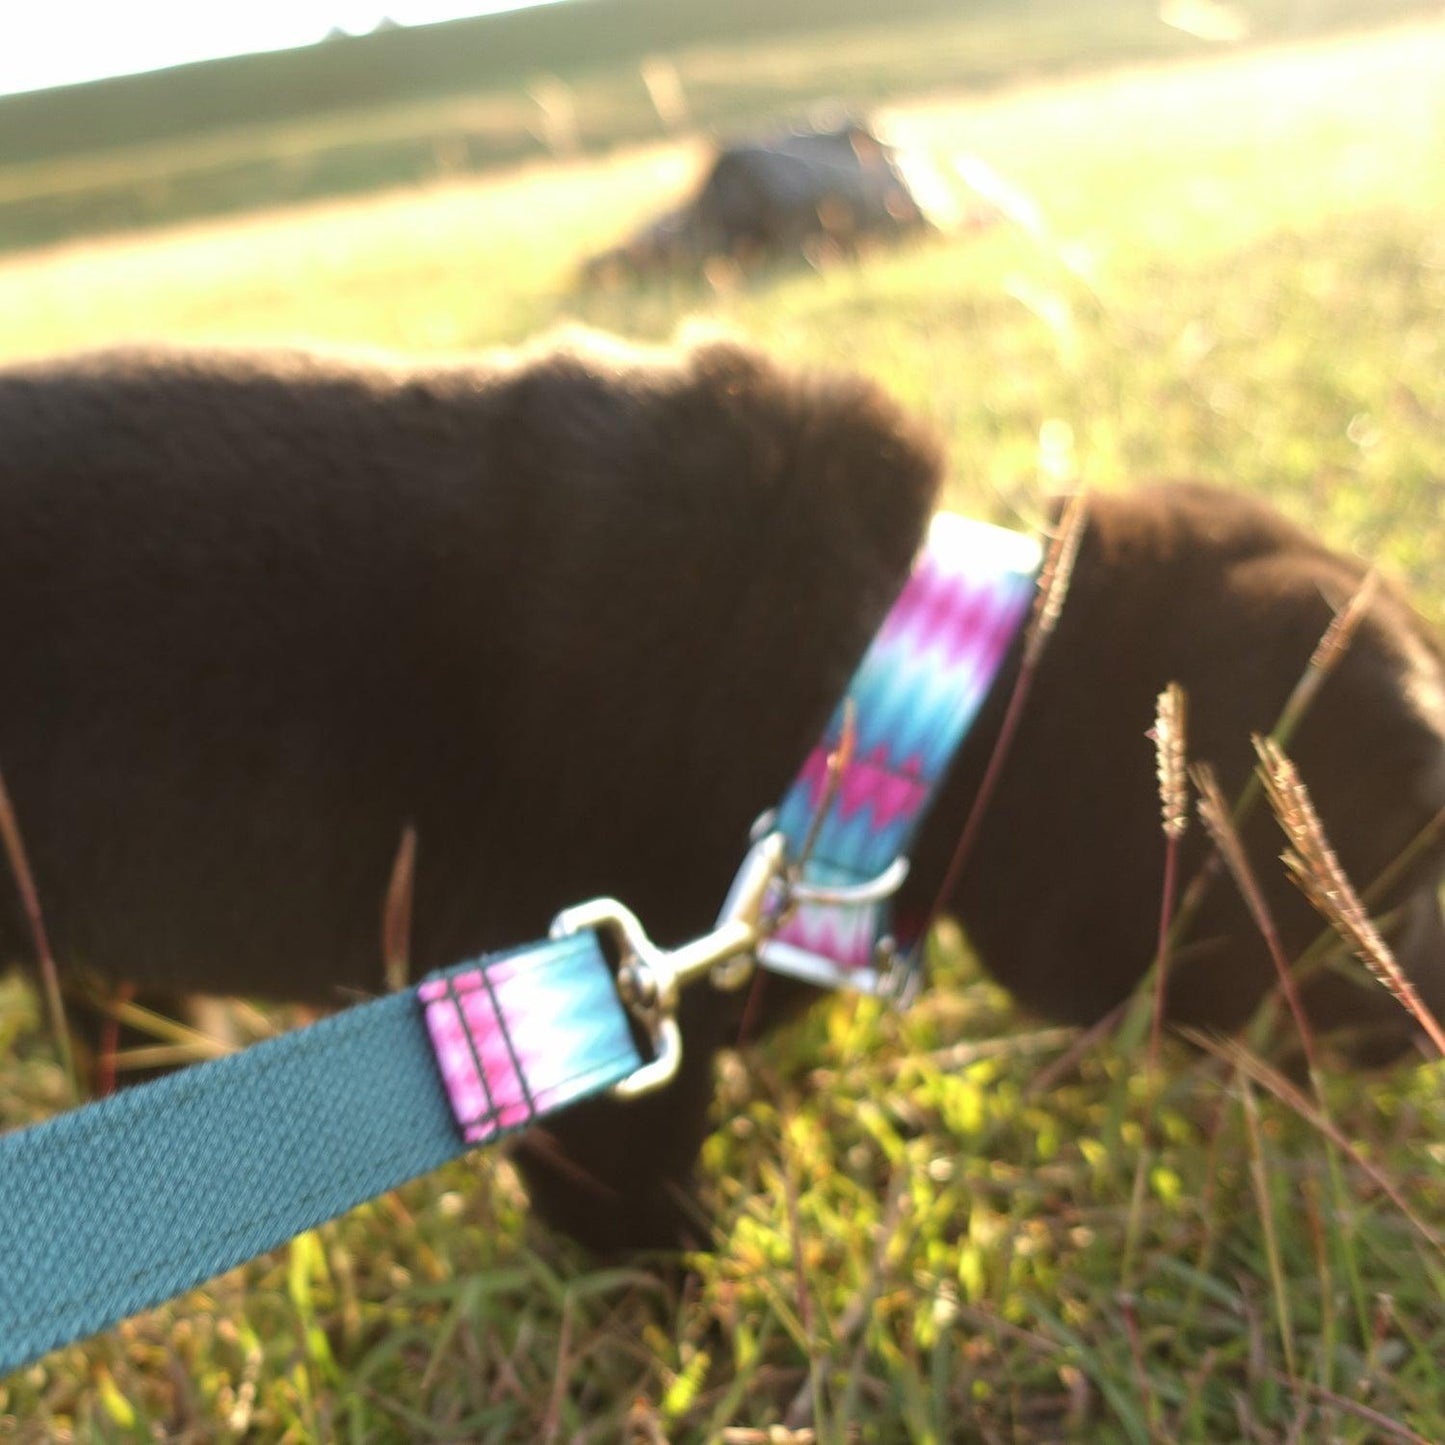 Colorful Soft Personalized Dog Collar Set - iTalkPet